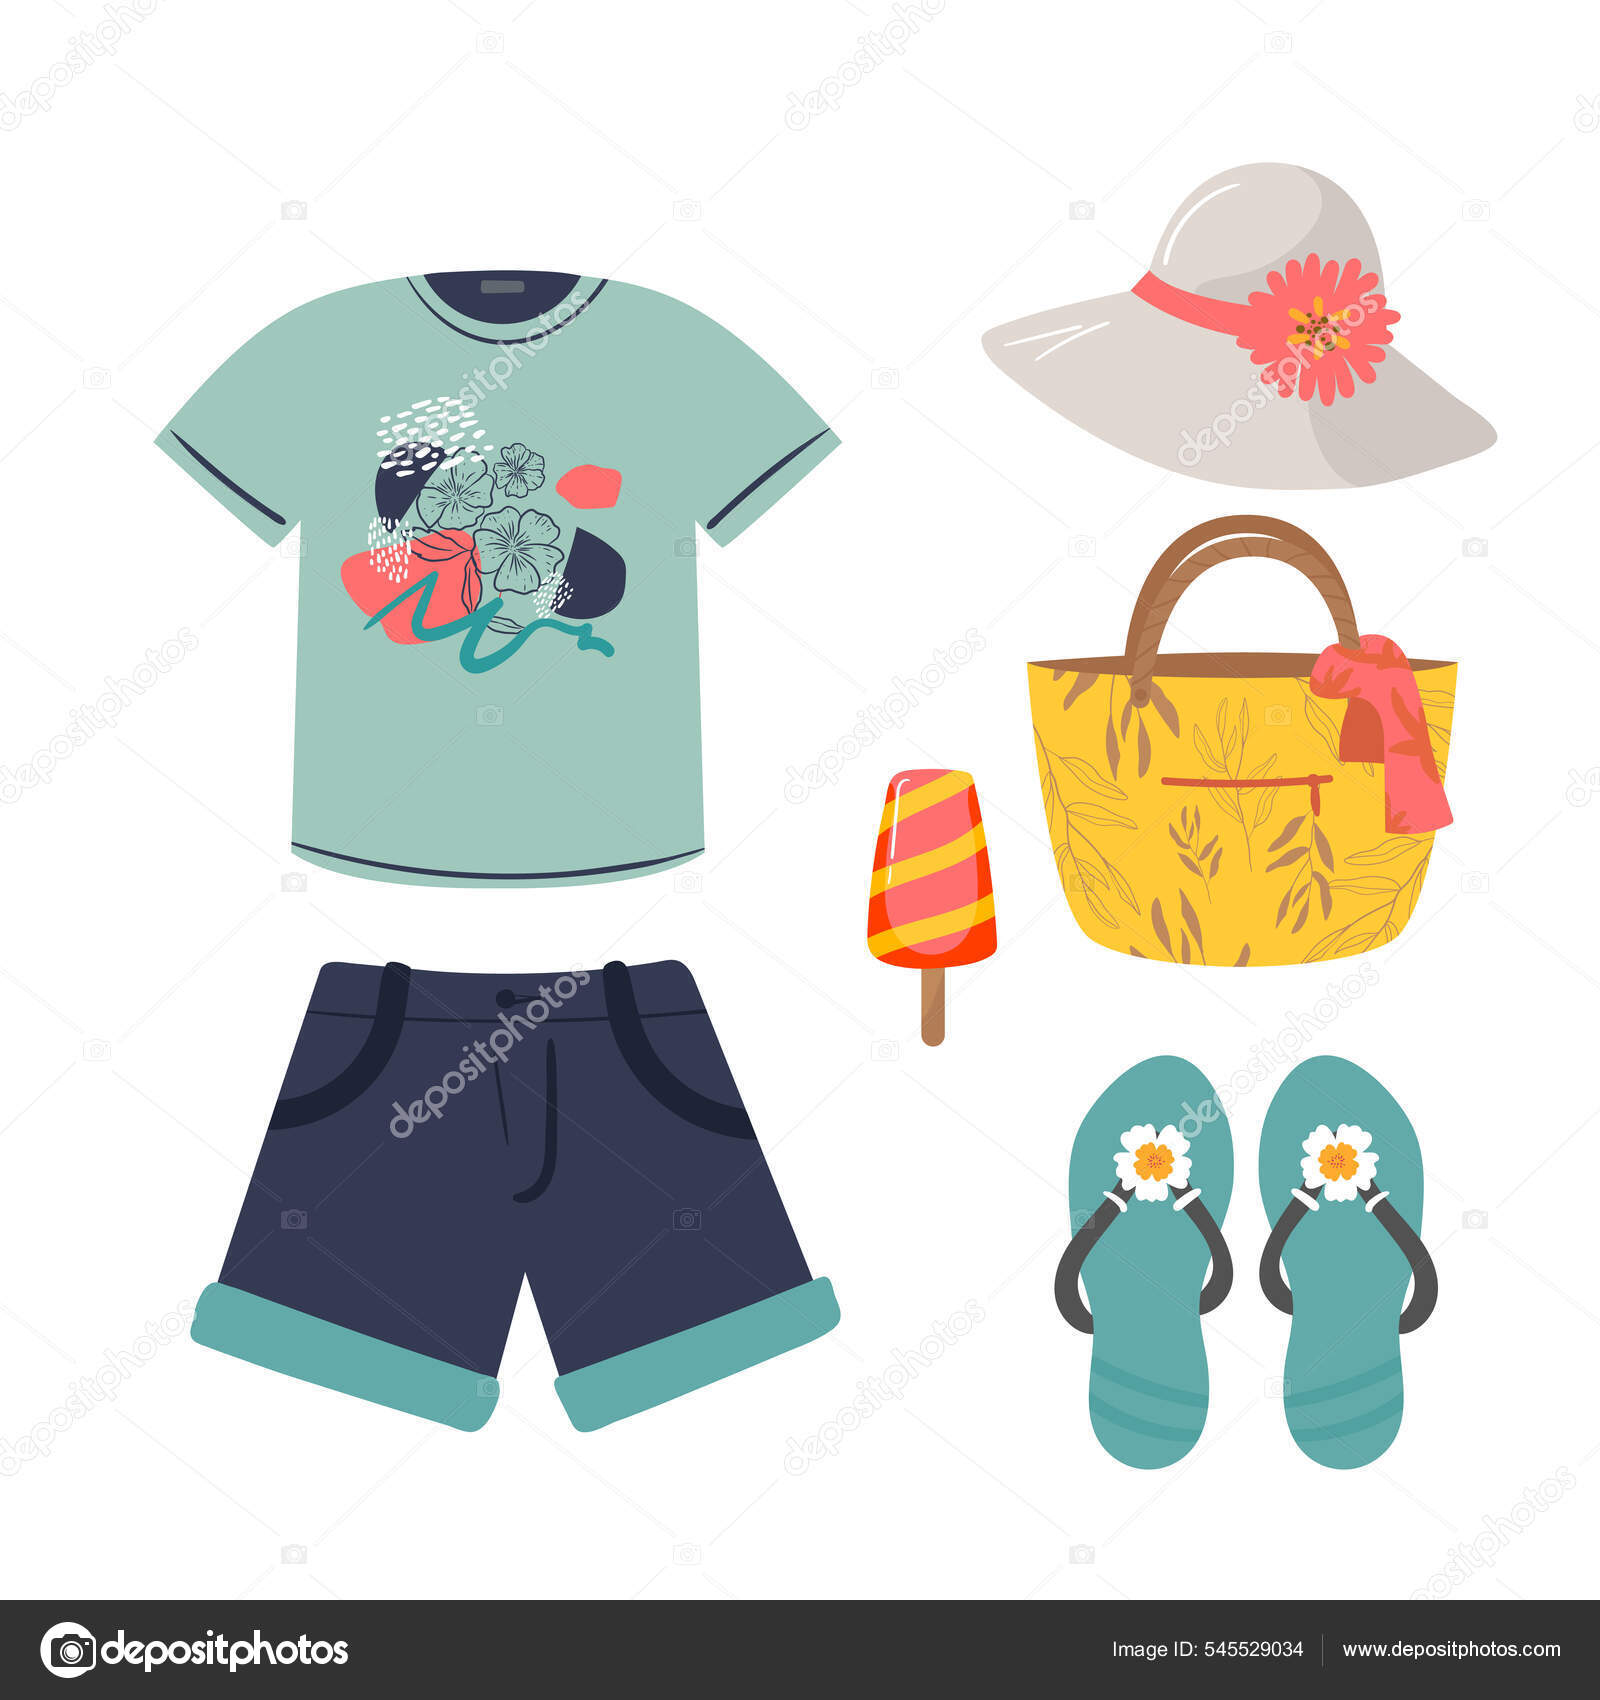 https://st.depositphotos.com/55284584/54552/v/1600/depositphotos_545529034-stock-illustration-woman-summer-clothing-vector-icon.jpg